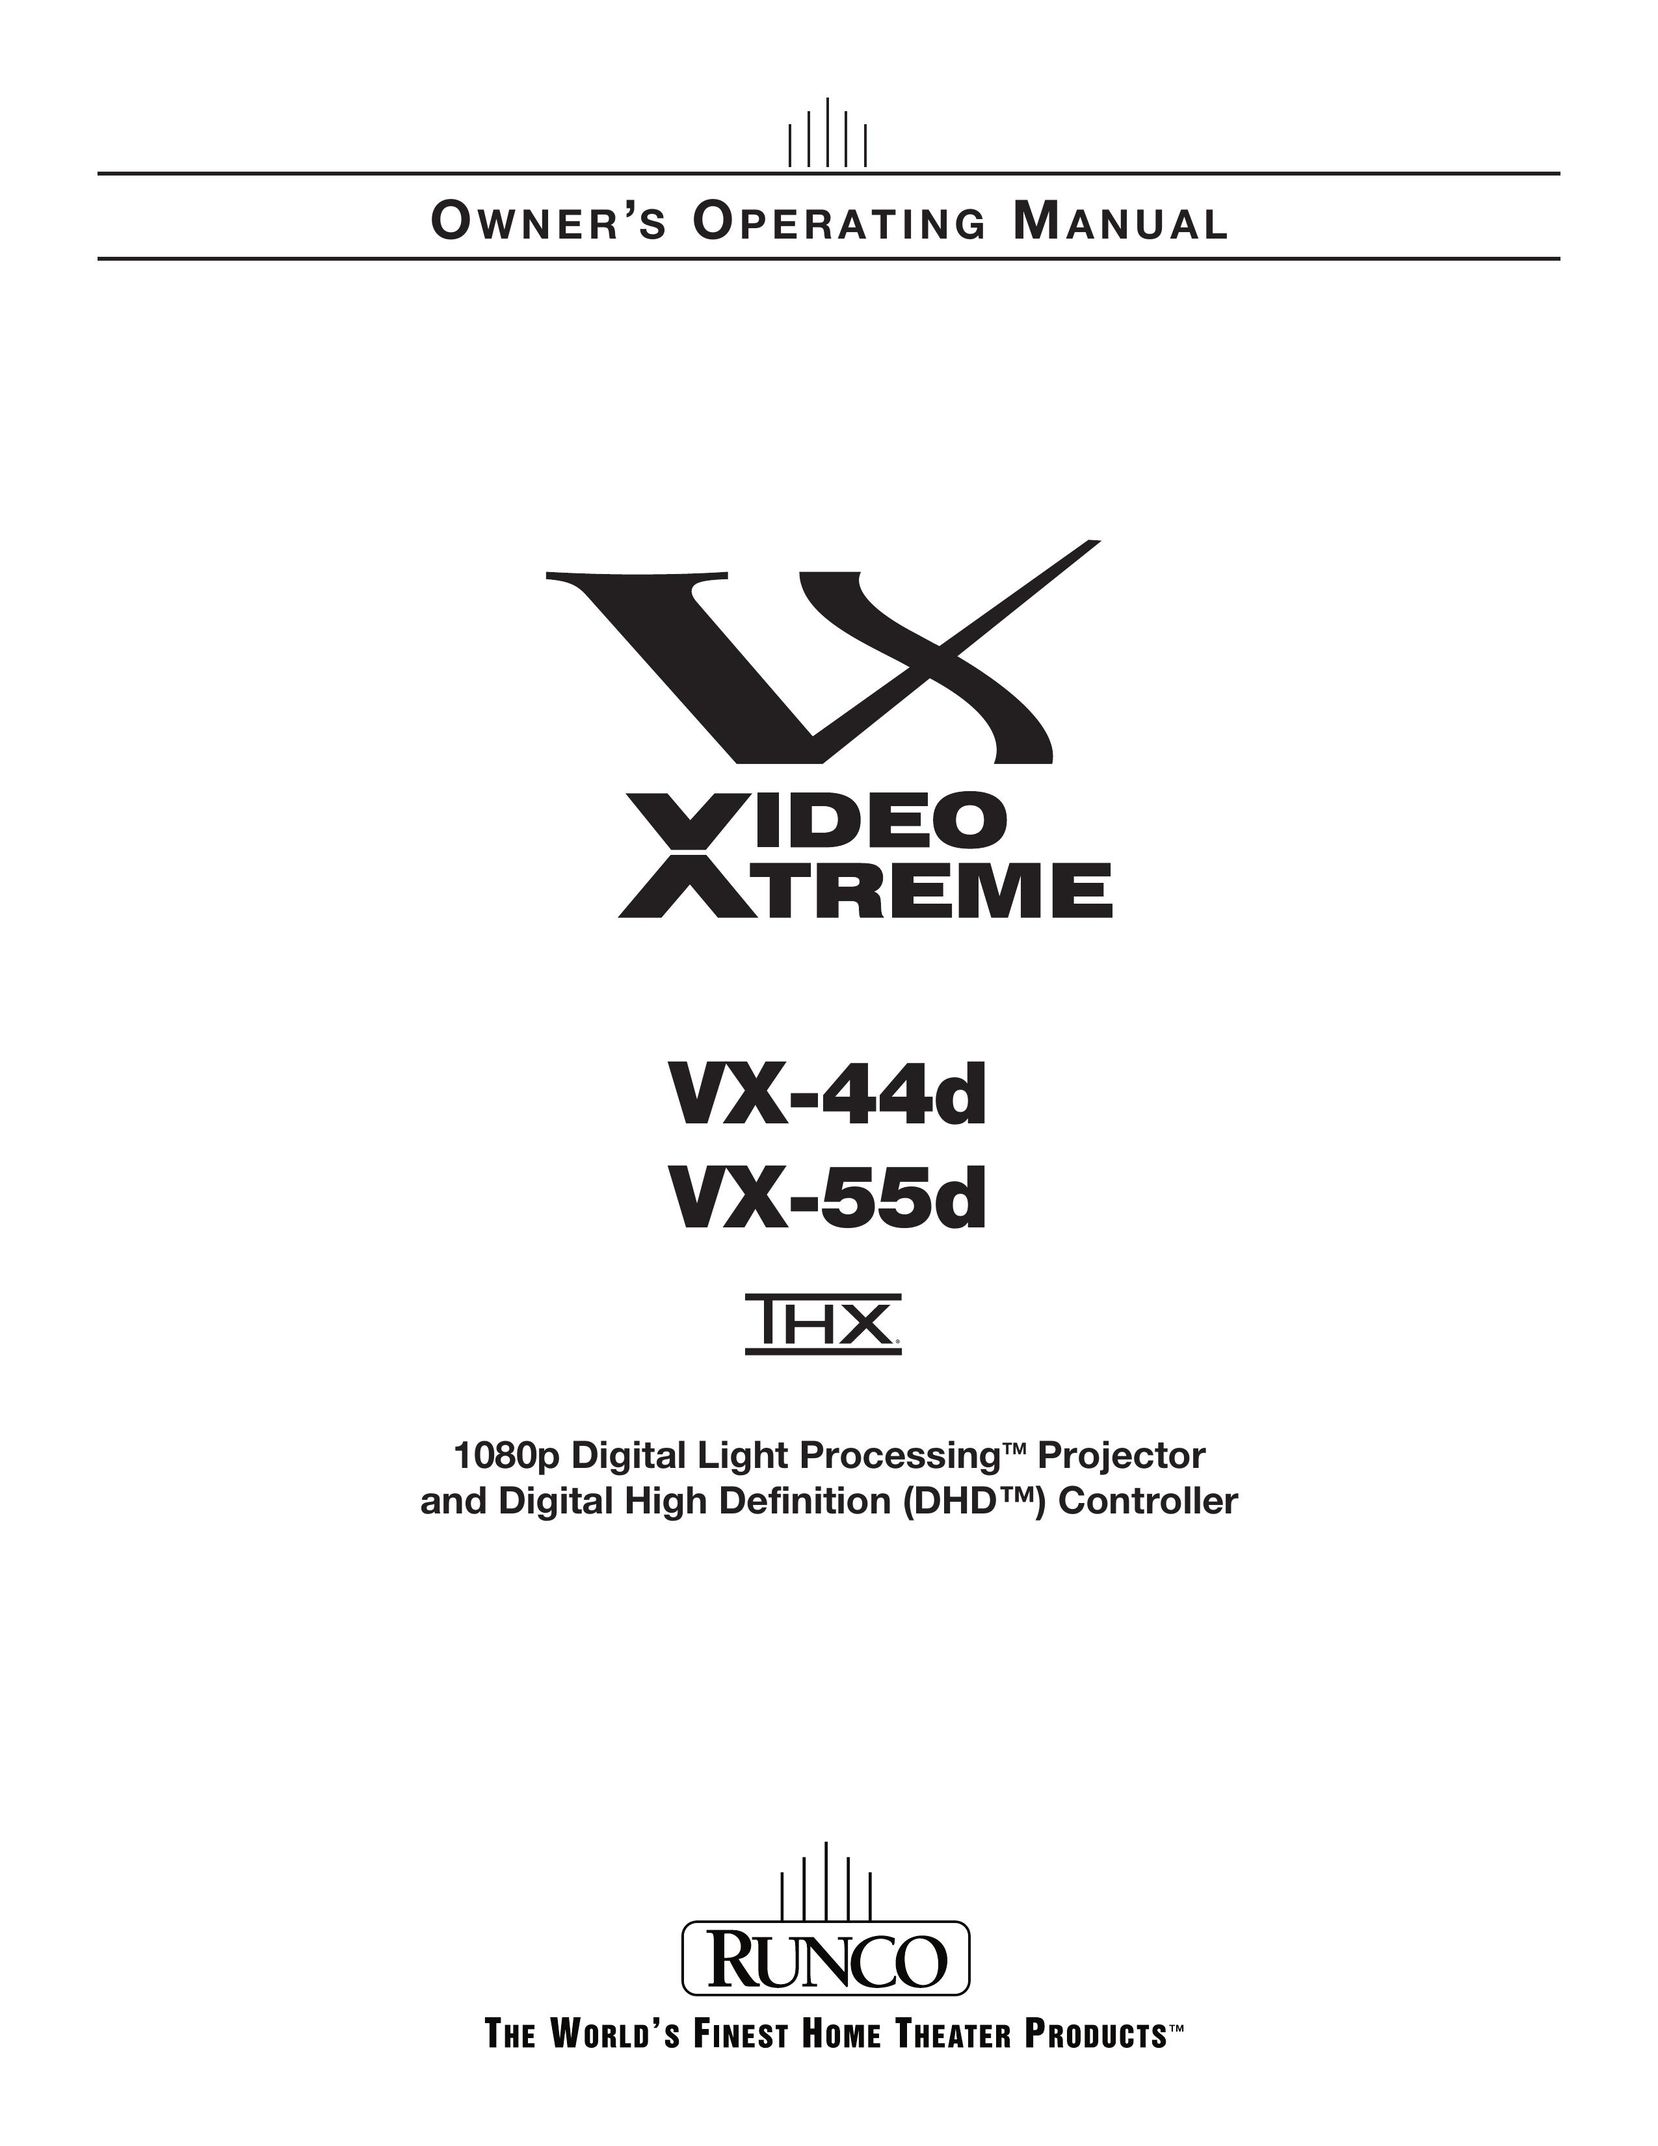 Runco VX-55d Projection Television User Manual